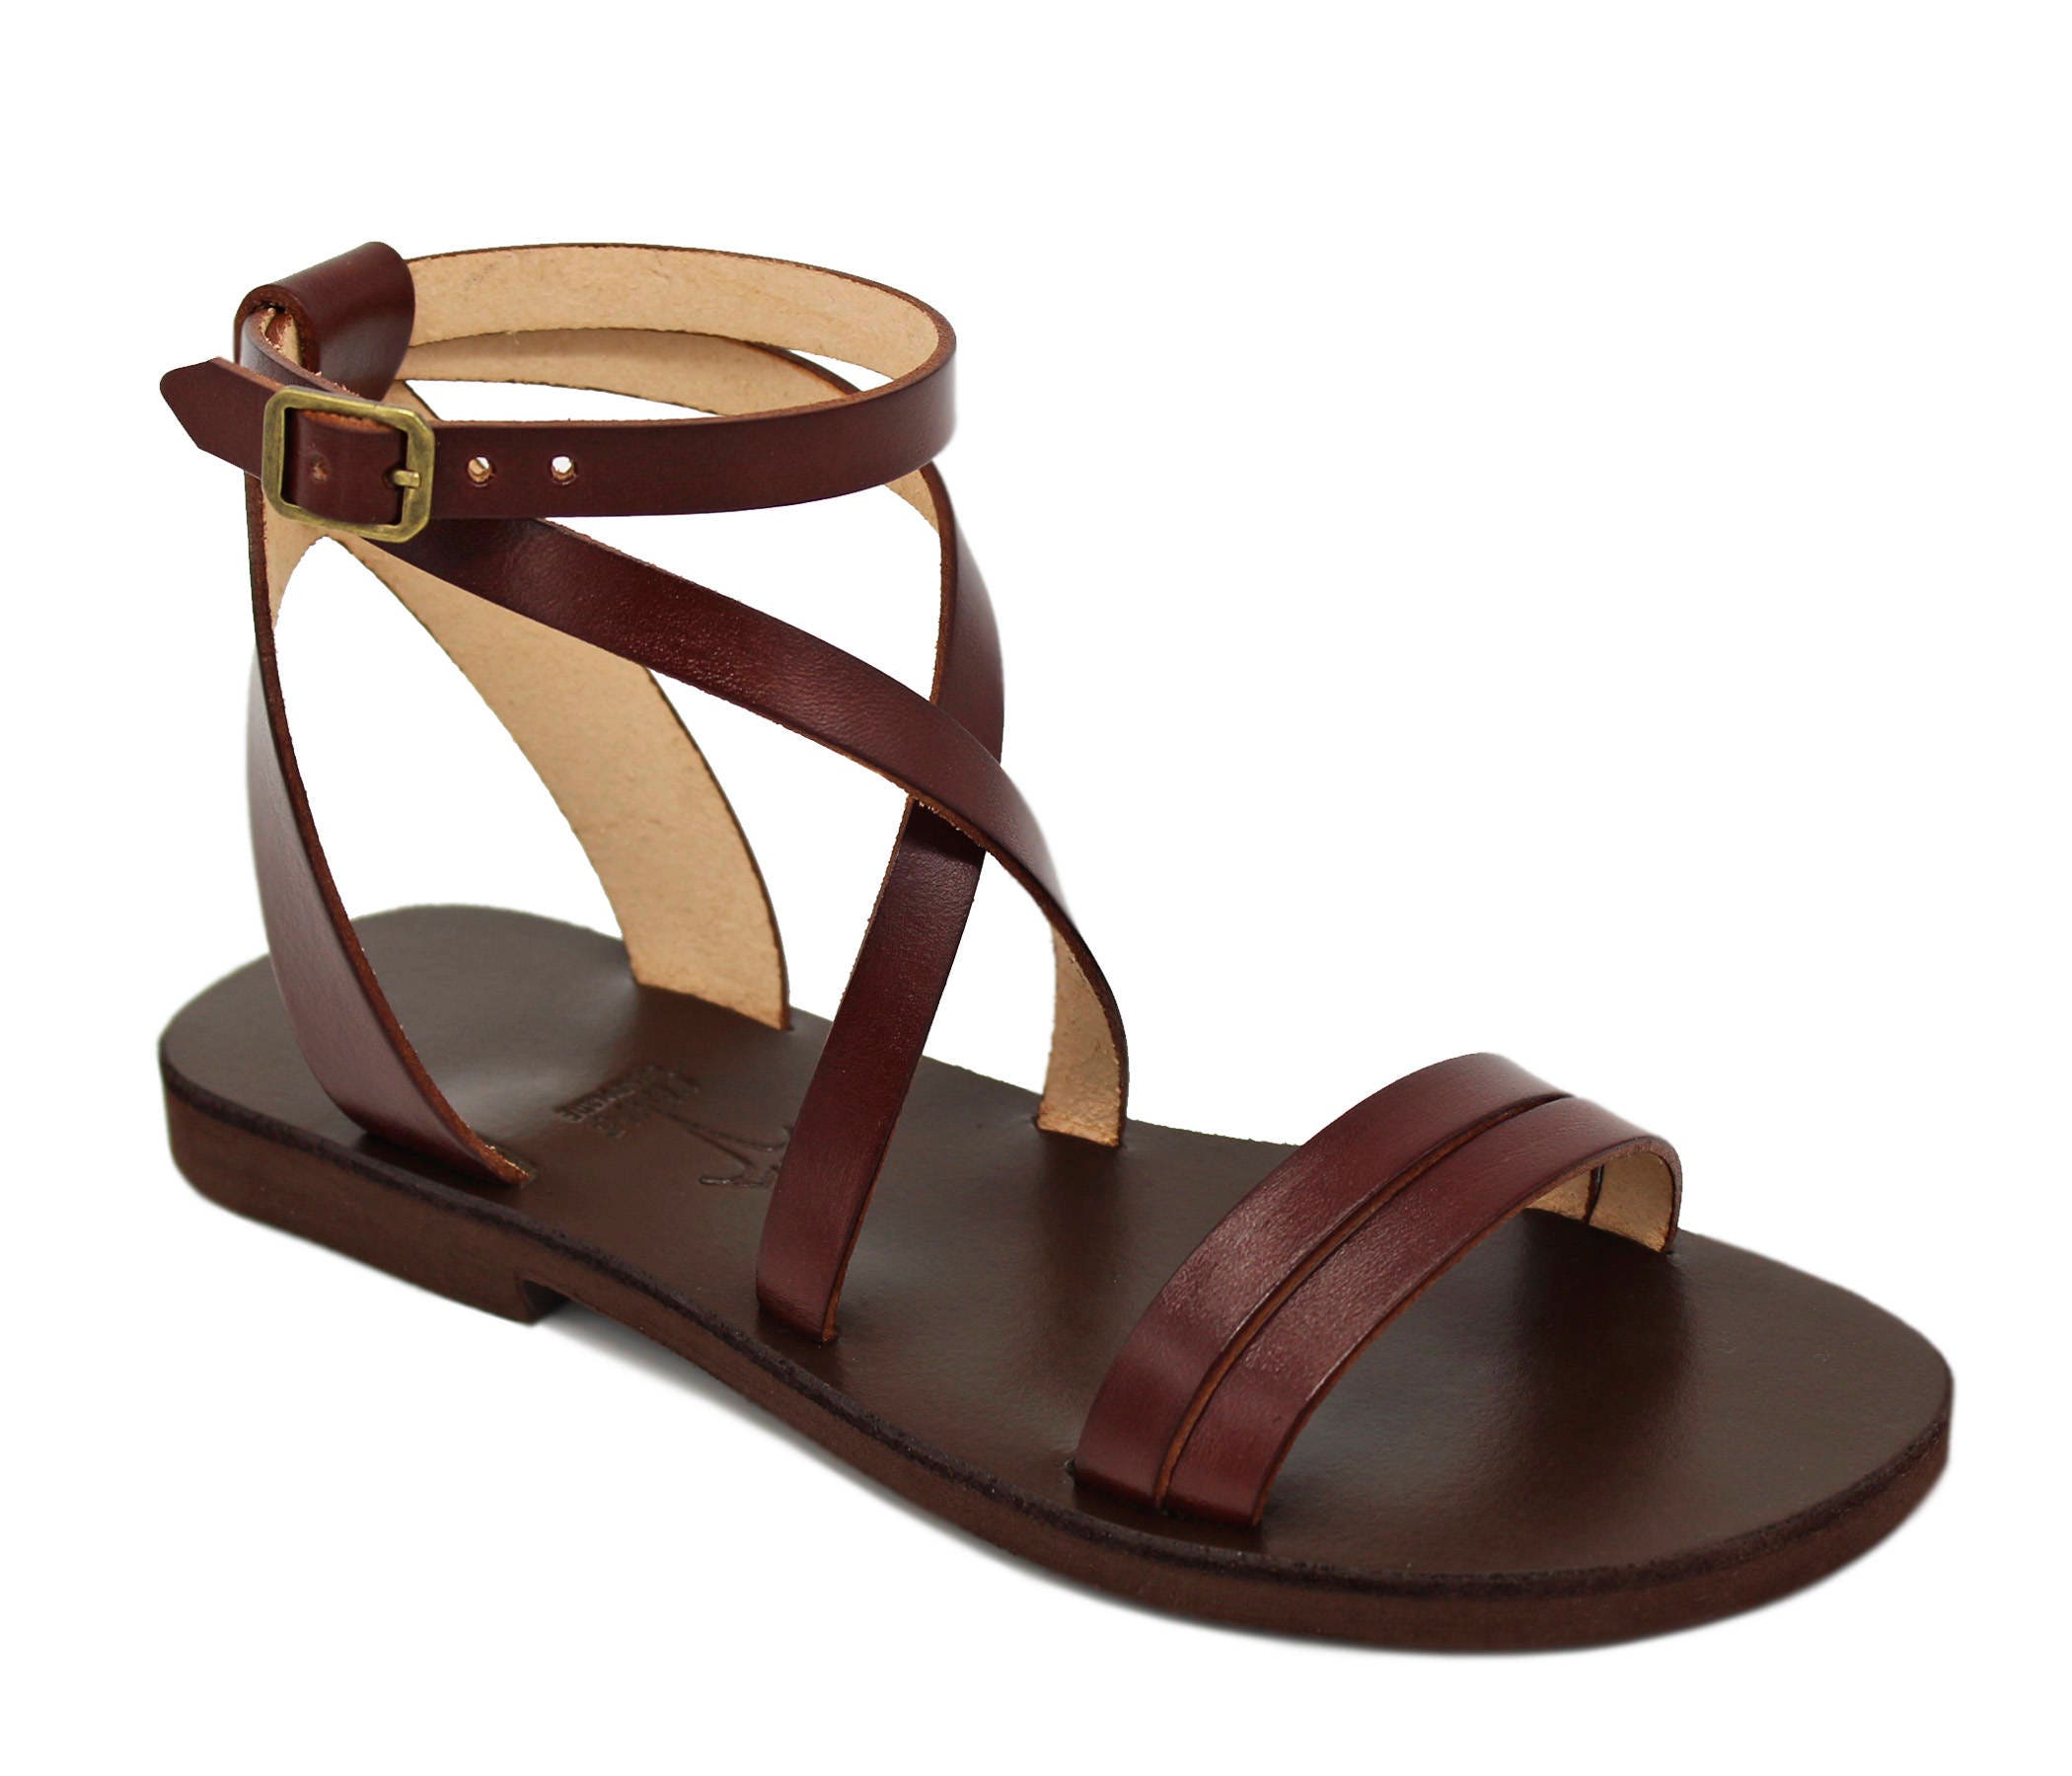 EPIC strappy sandals/ unisex gladiator leather sandals/ | Etsy